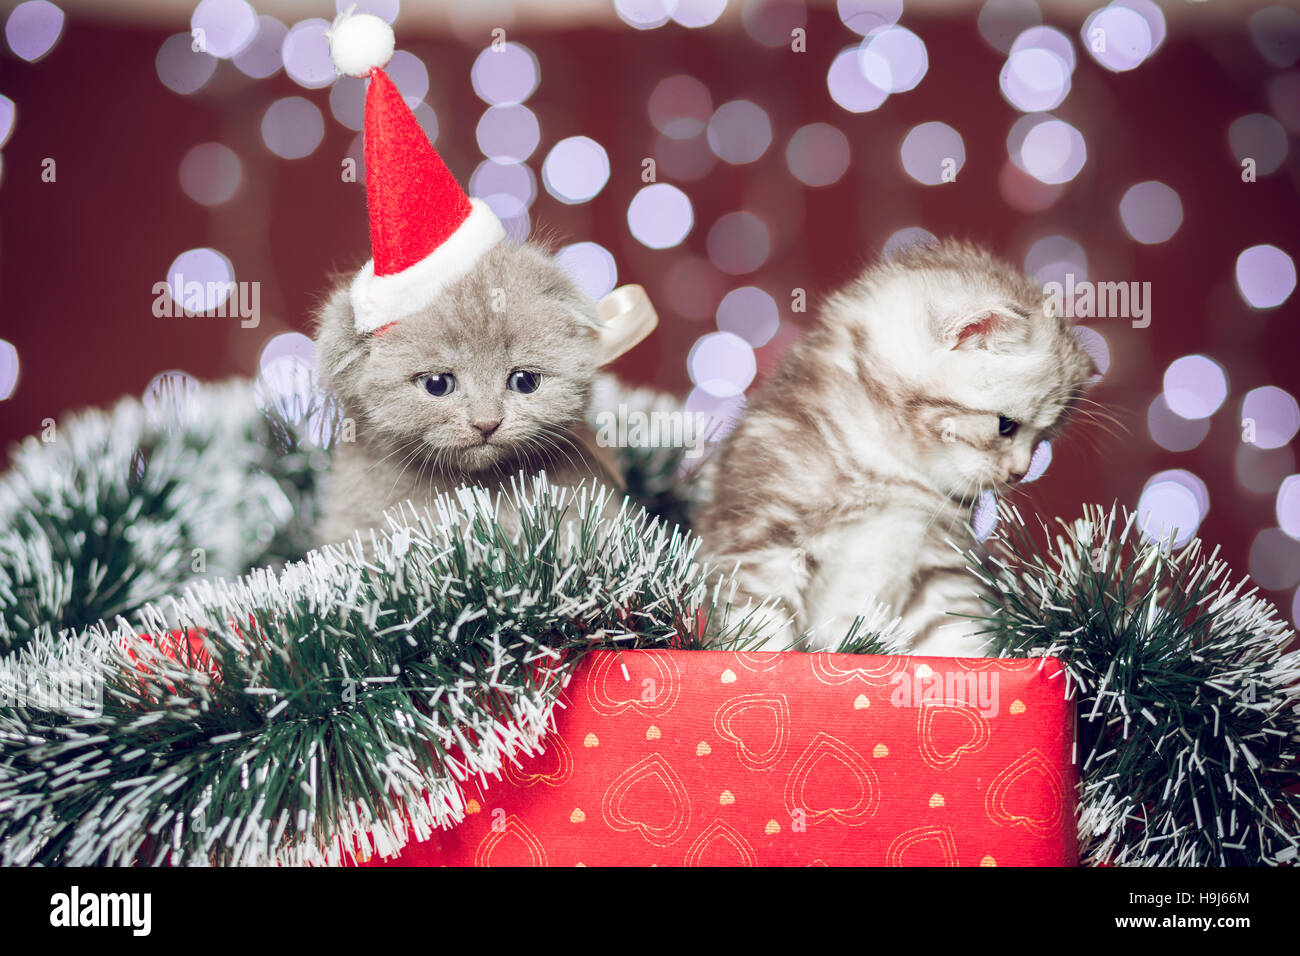 Two kittens wearing santa hat sitting on gift box Stock Photo